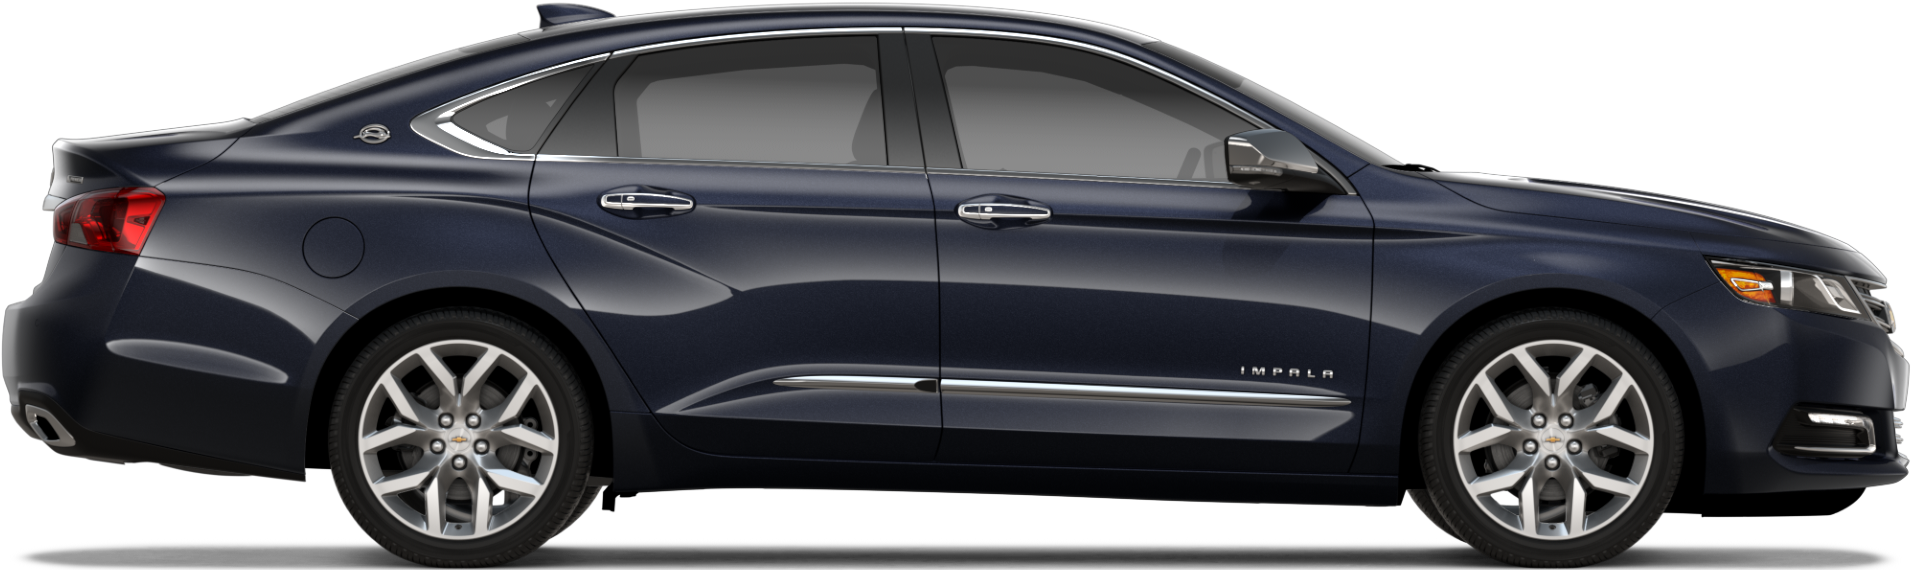 Chevrolet Impala (2500x1000), Png Download